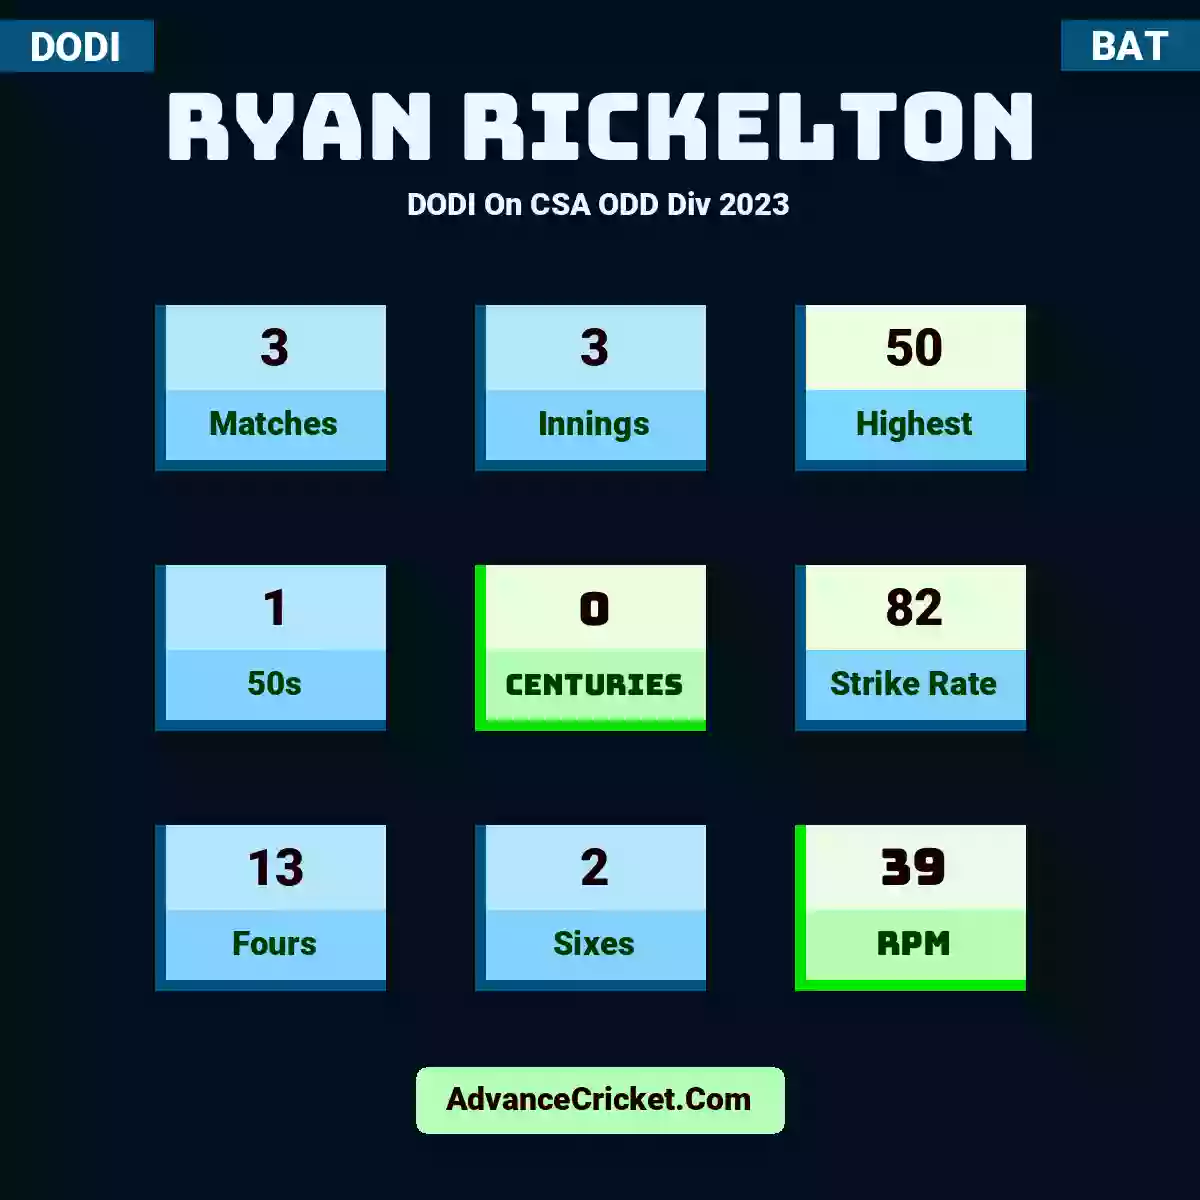 Ryan Rickelton DODI  On CSA ODD Div 2023, Ryan Rickelton played 3 matches, scored 50 runs as highest, 1 half-centuries, and 0 centuries, with a strike rate of 82. R.Rickelton hit 13 fours and 2 sixes, with an RPM of 39.